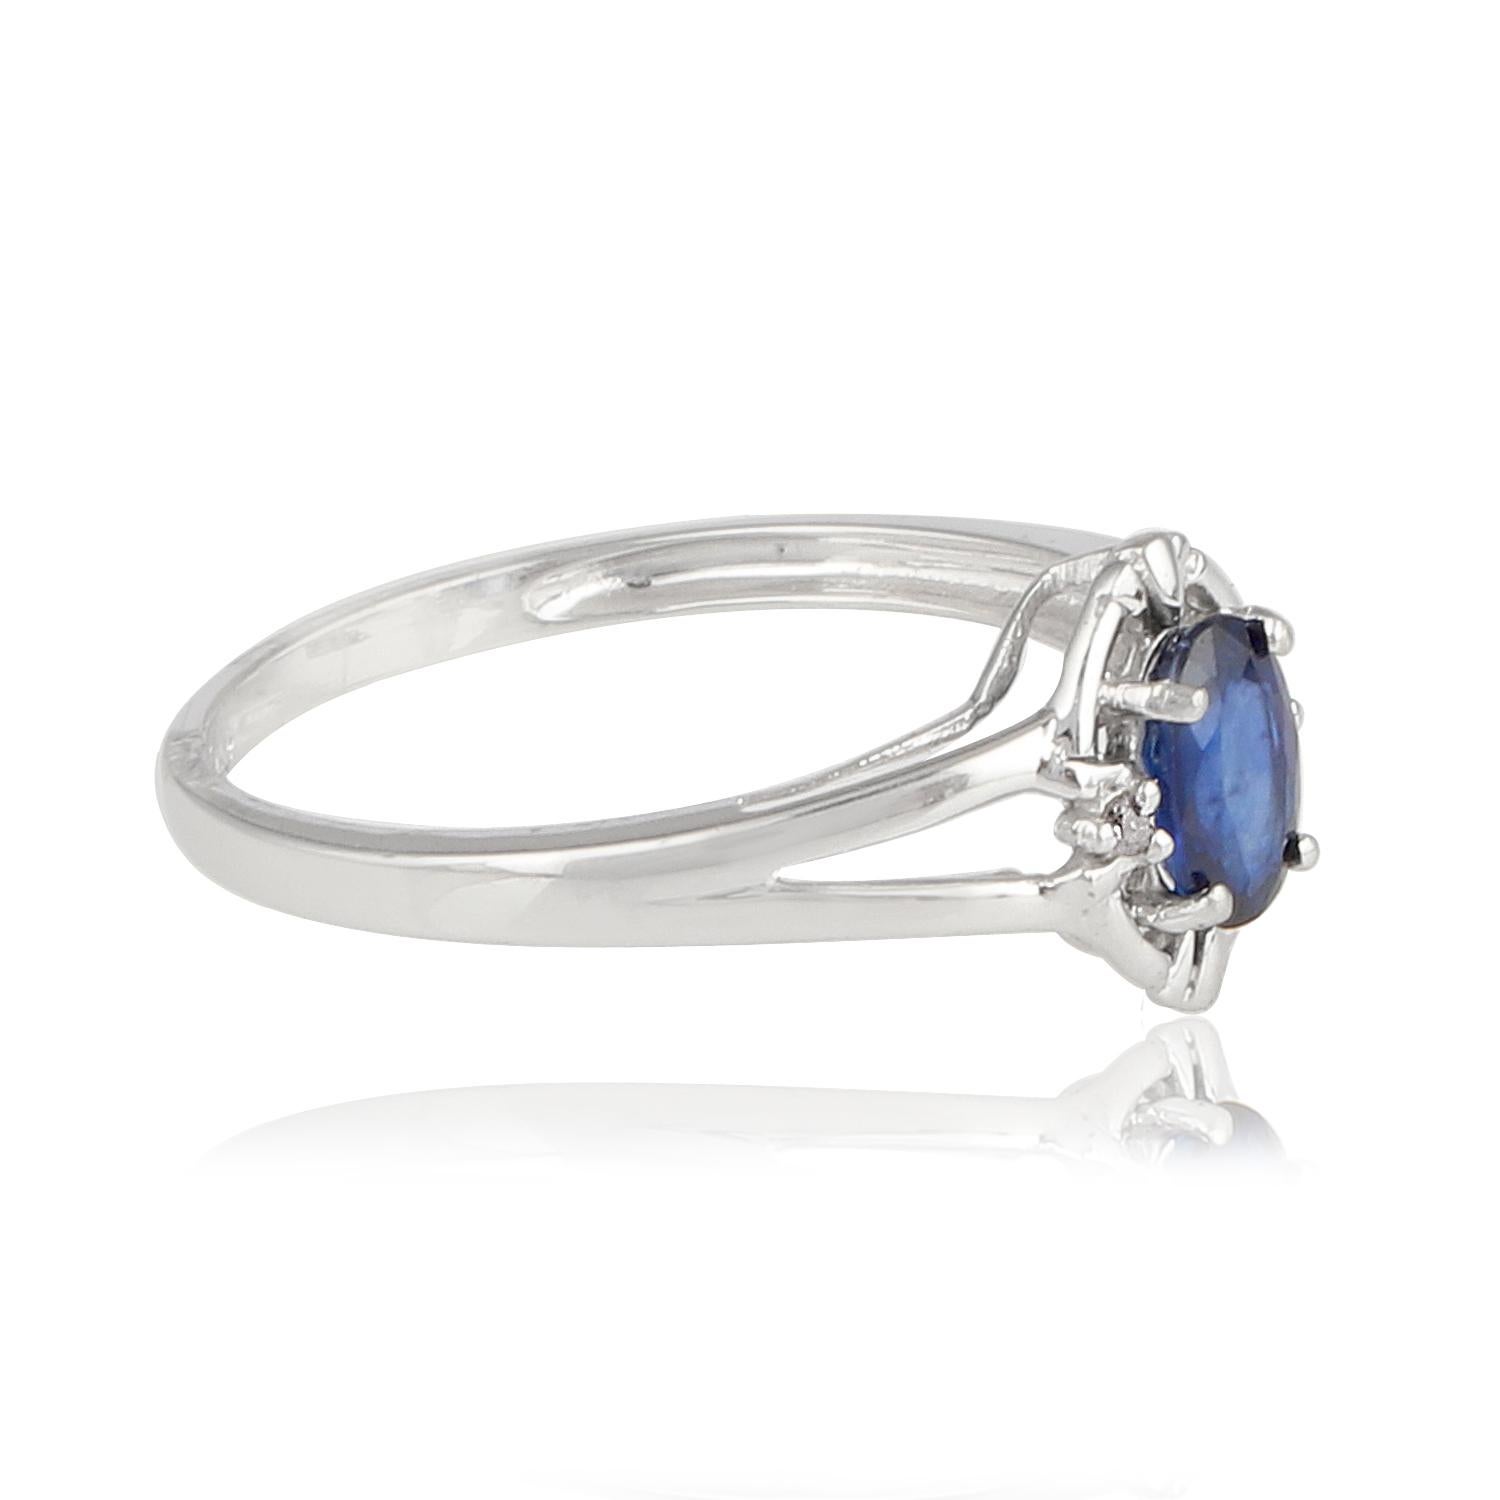 For Sale:  Natural Blue Sapphire Gemstone Ring Diamond Pave 9 Karat White Gold Fine Jewelry 5